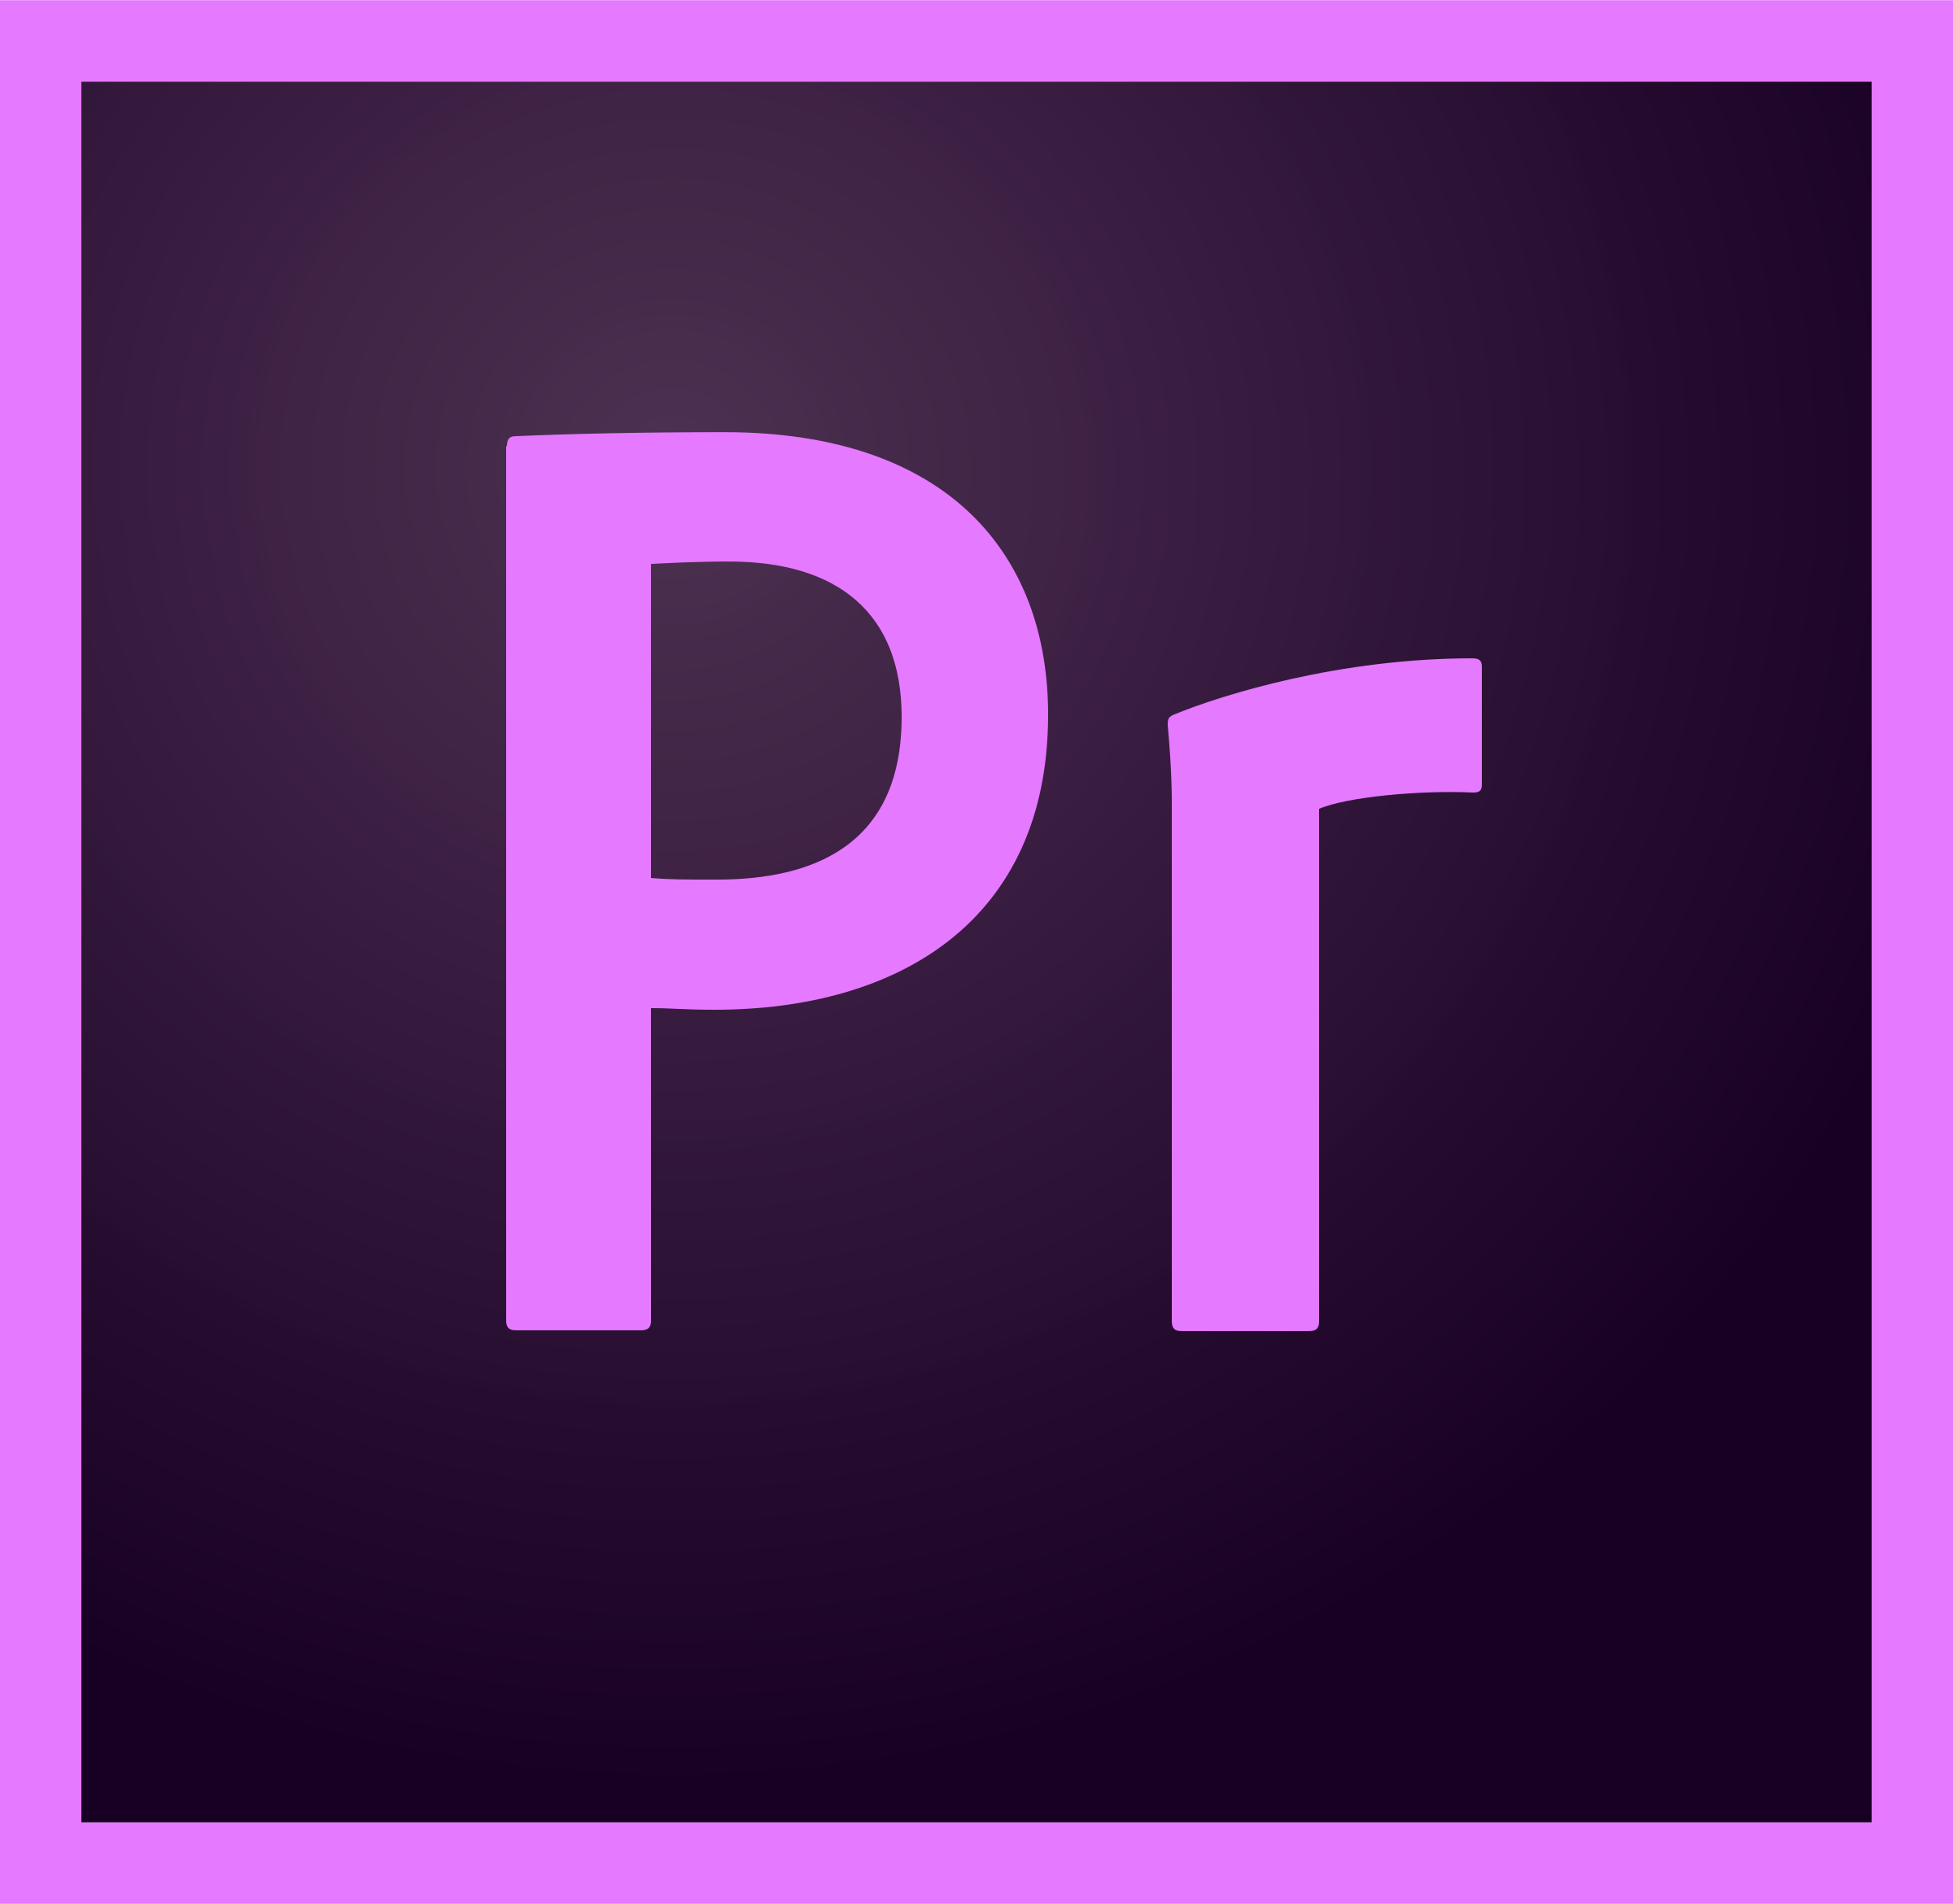 Compatible with Adobe Premiere Pro